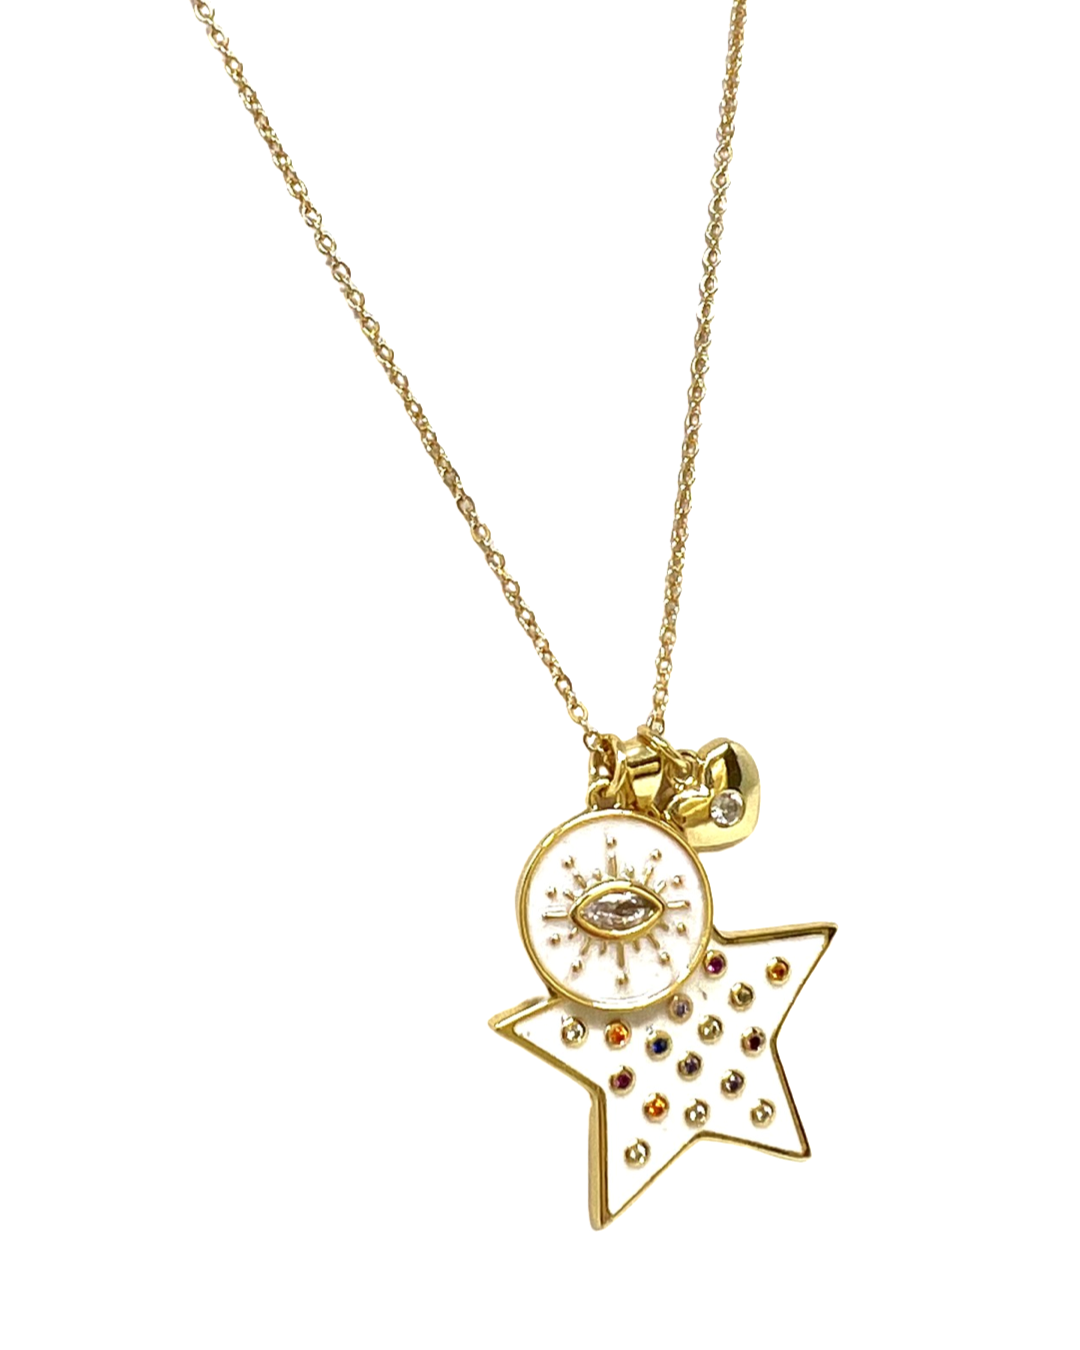 Stellar Love Charm Necklace in Gold